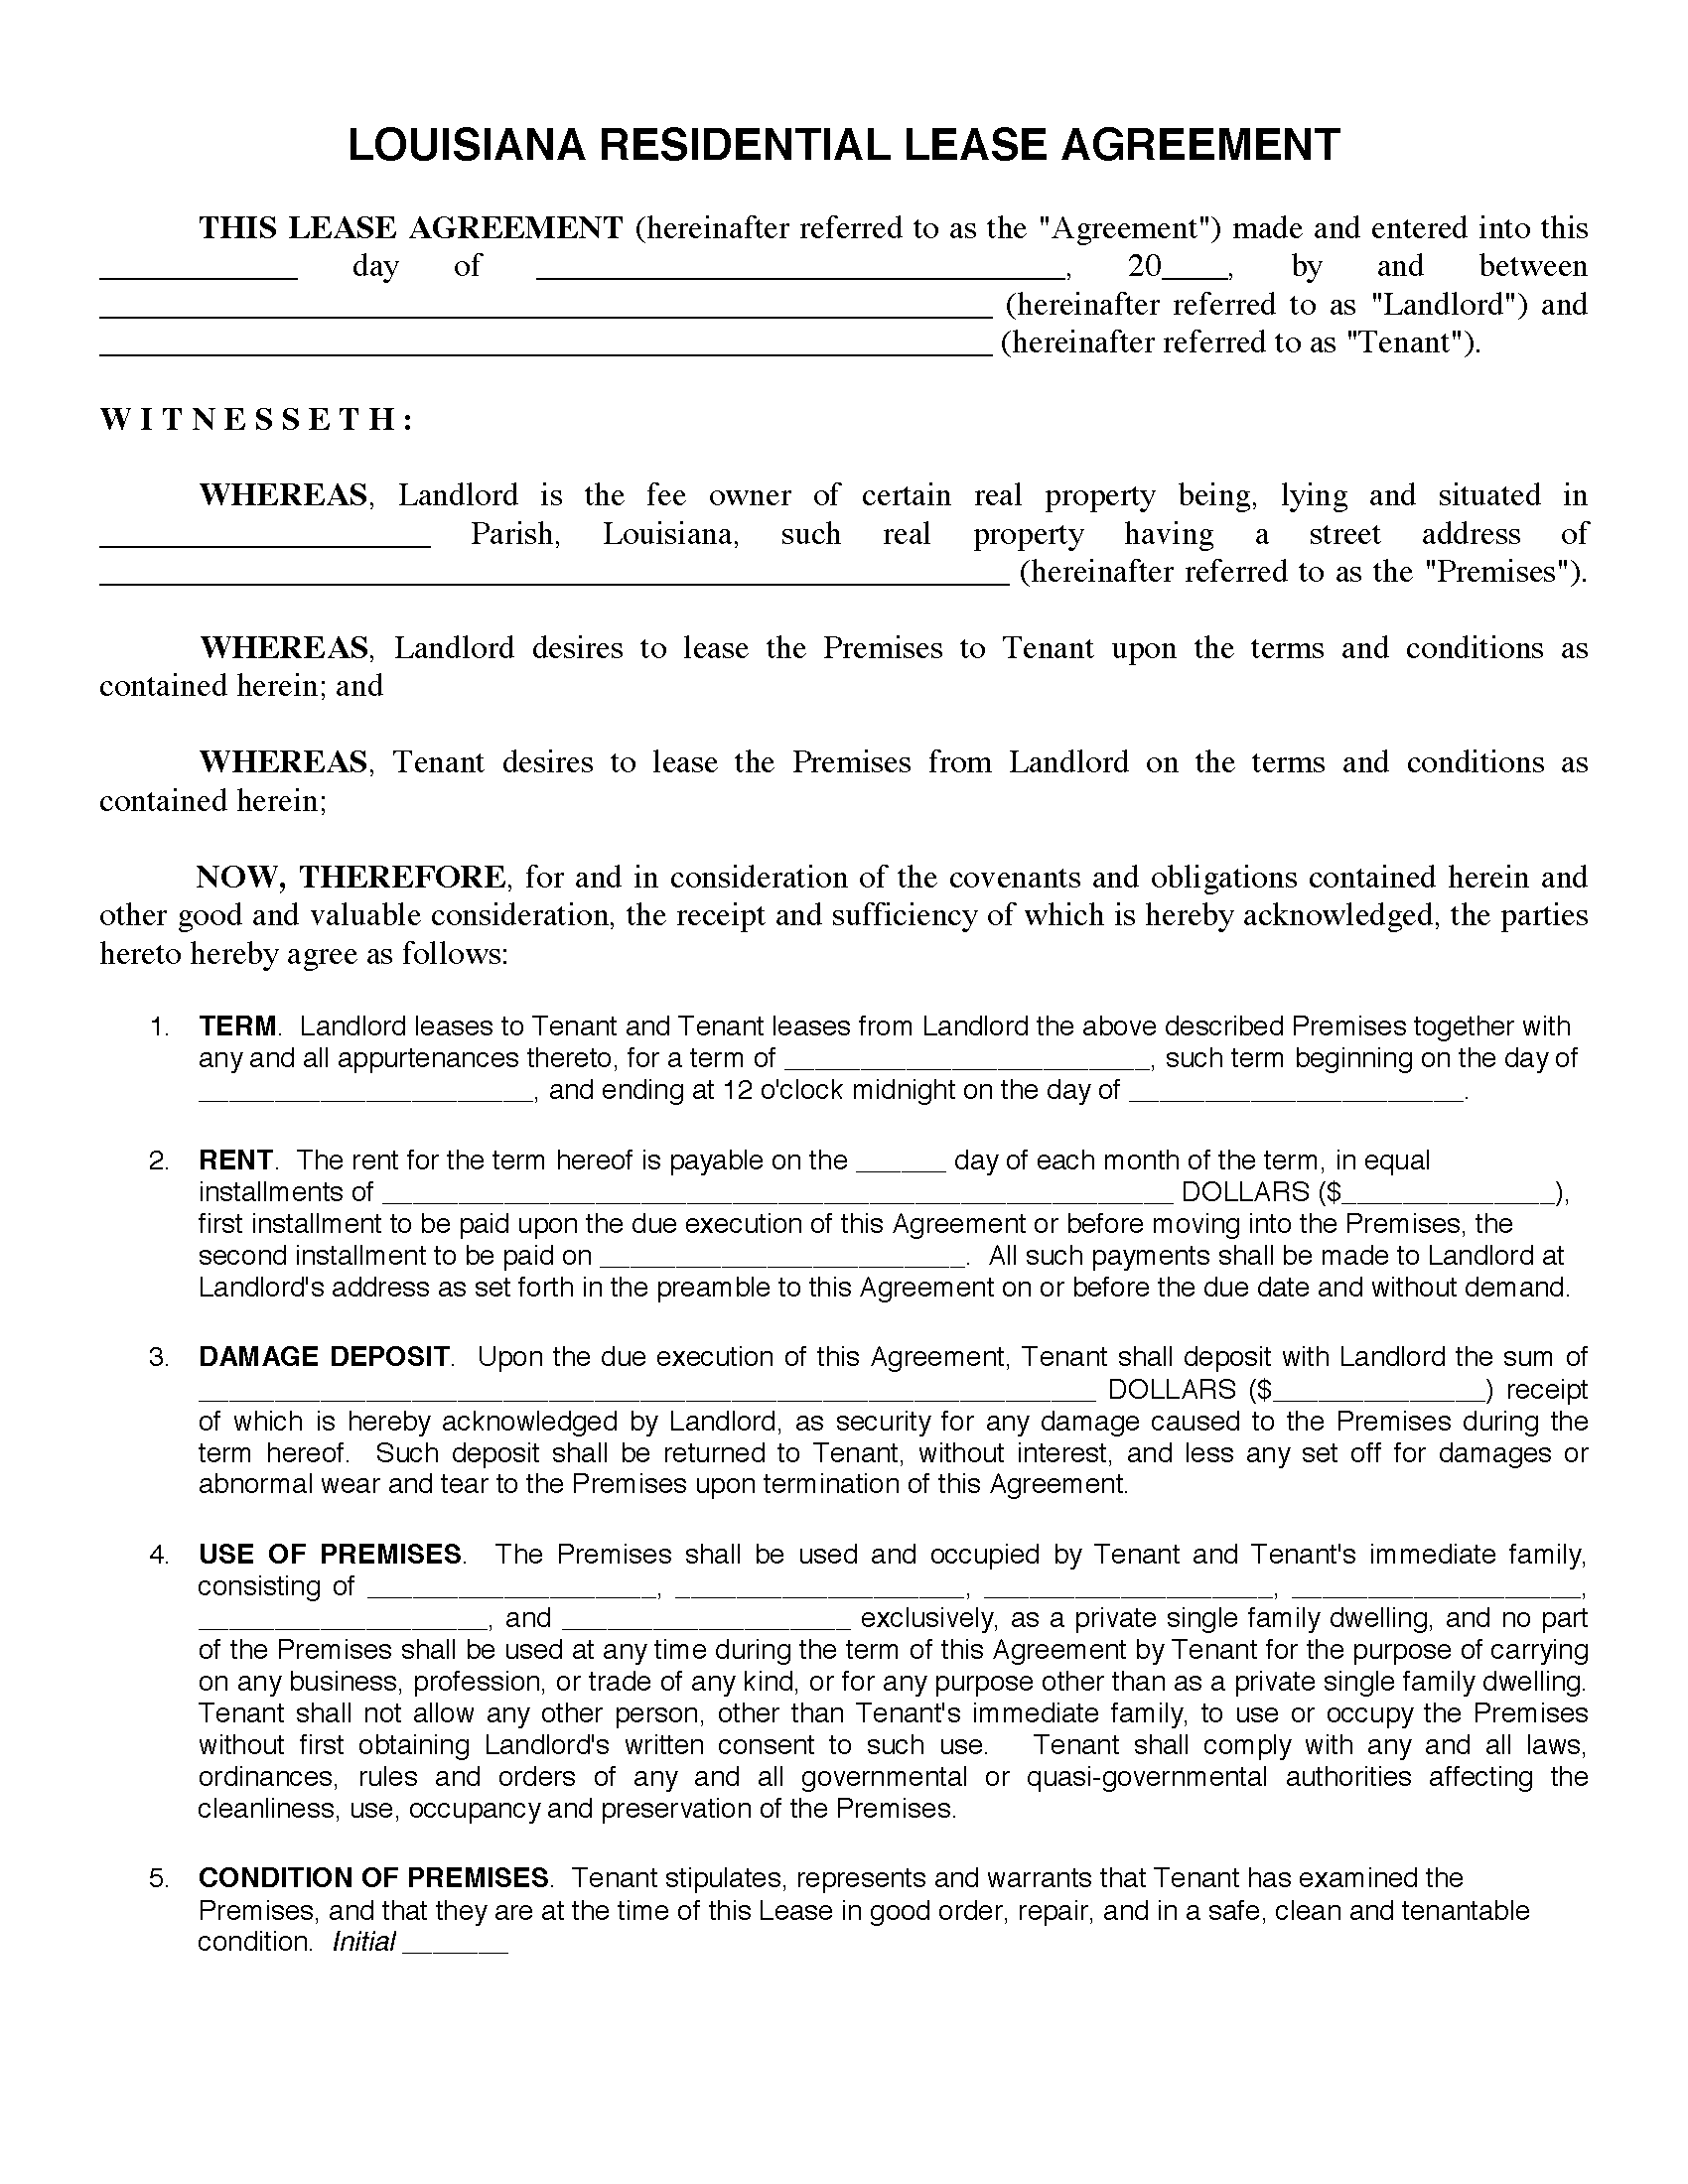 free louisiana residential lease agreement pdf